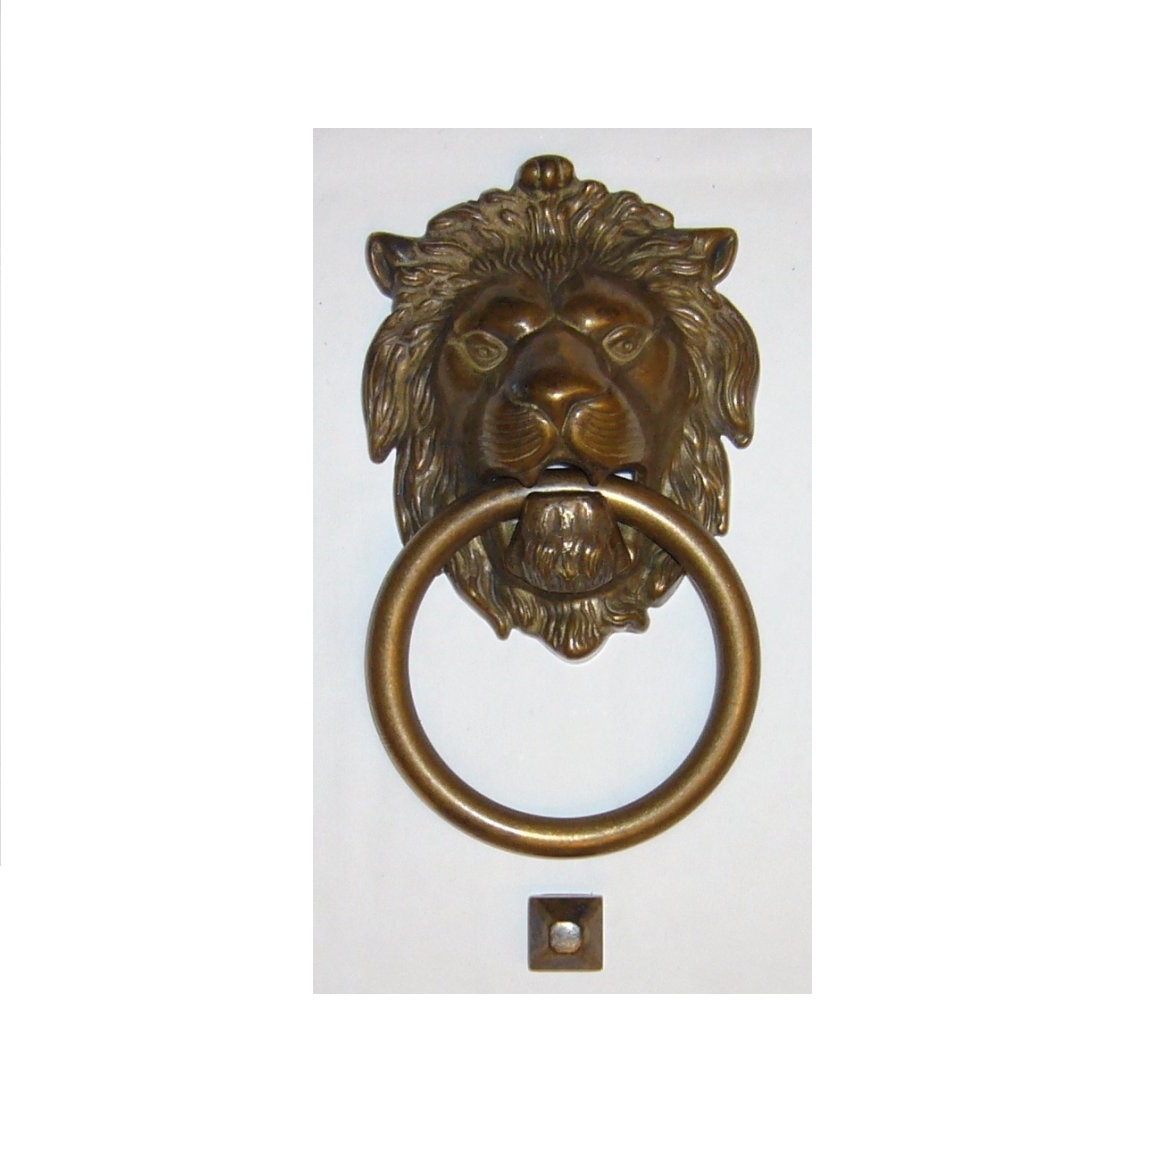 battiporta anticato con anello - antique lion door knocker with ring